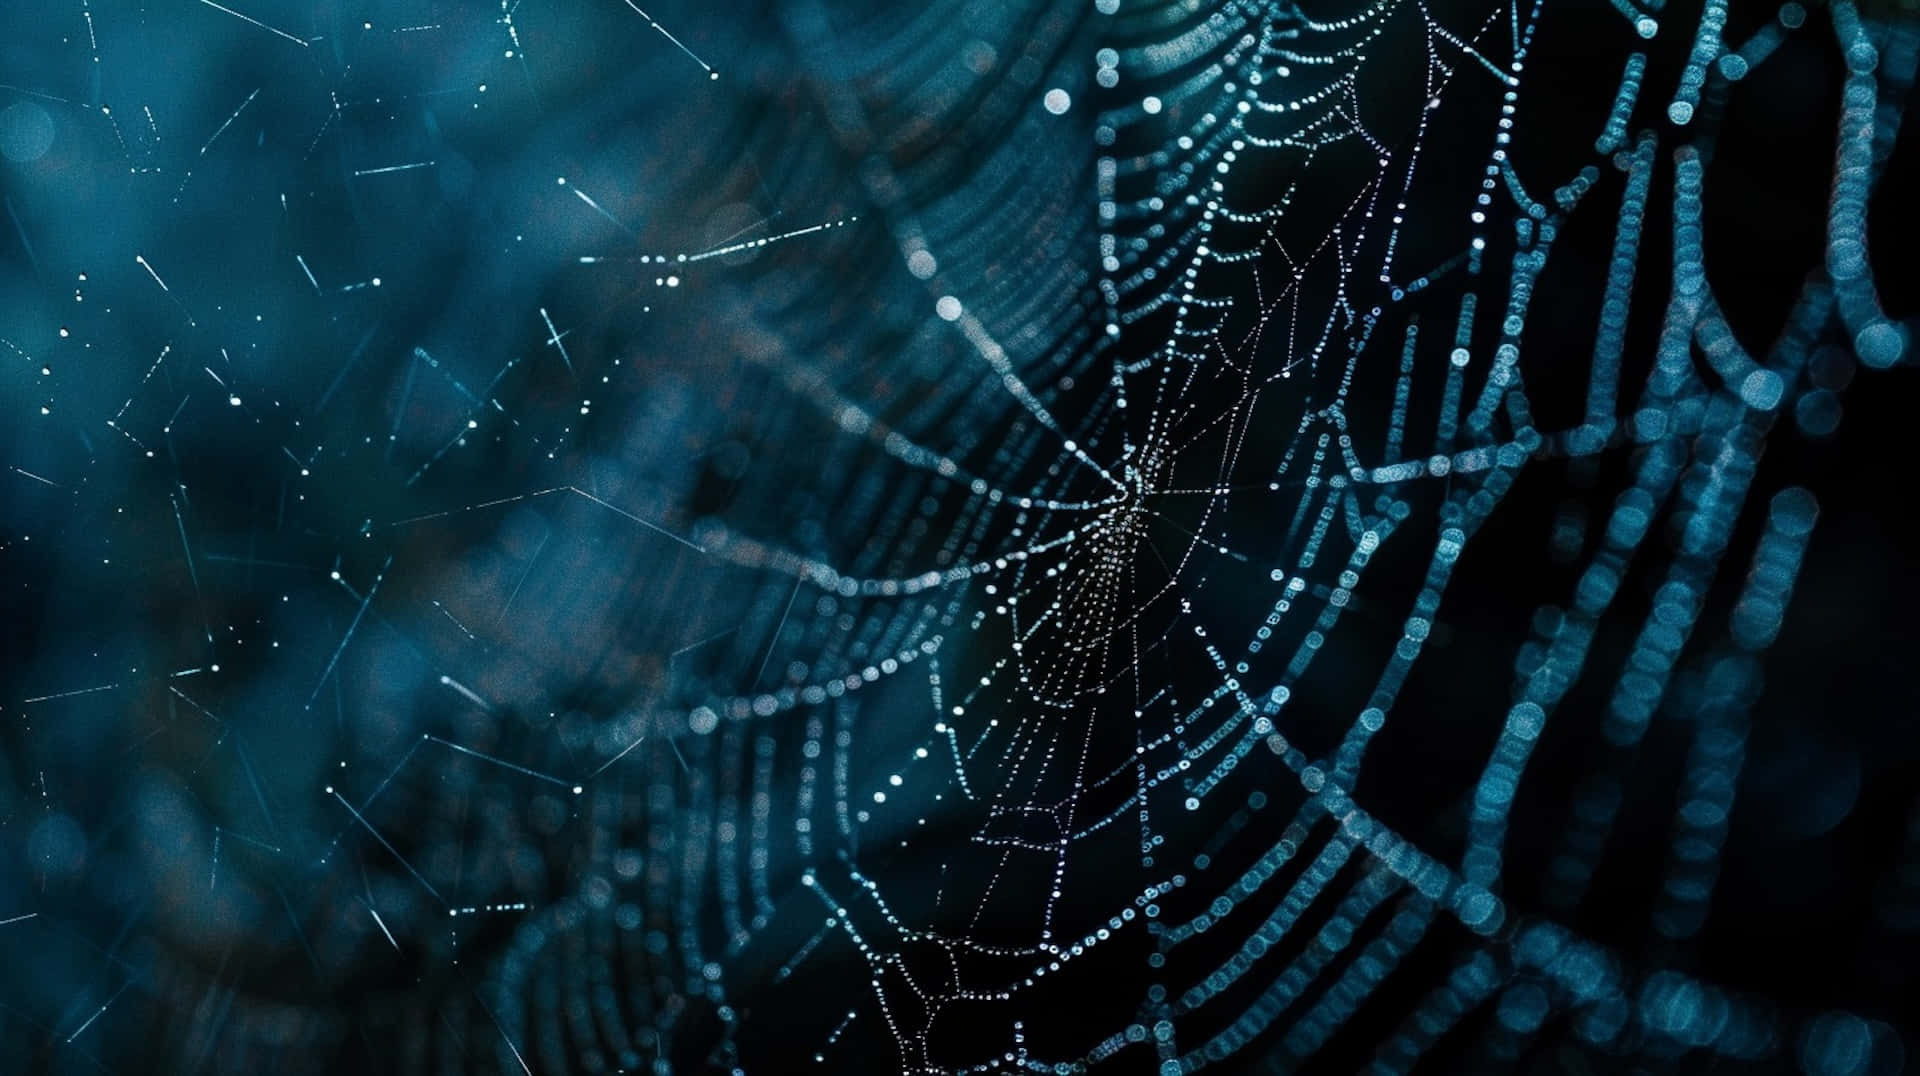 Intricate Spider Web Dew Drops Wallpaper